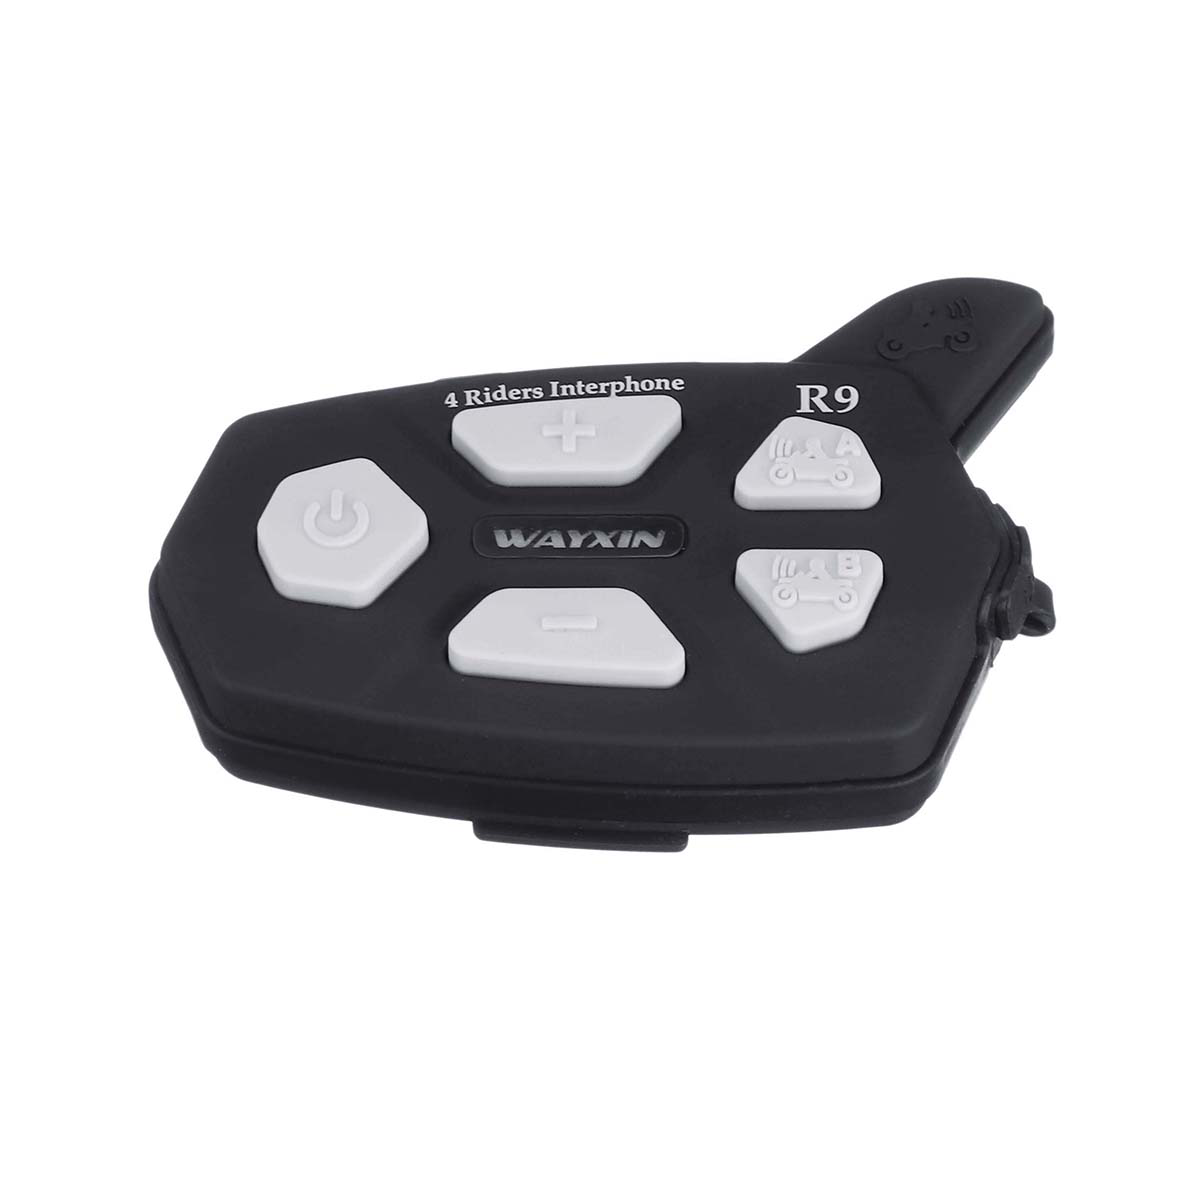 WAYXIN R9 1500M Universal Pairing Bluetooth 4 Riders Helmet Intercom Waterproof Motorcycle Full-Duplex FM Headsets Interphone - Auto GoShop